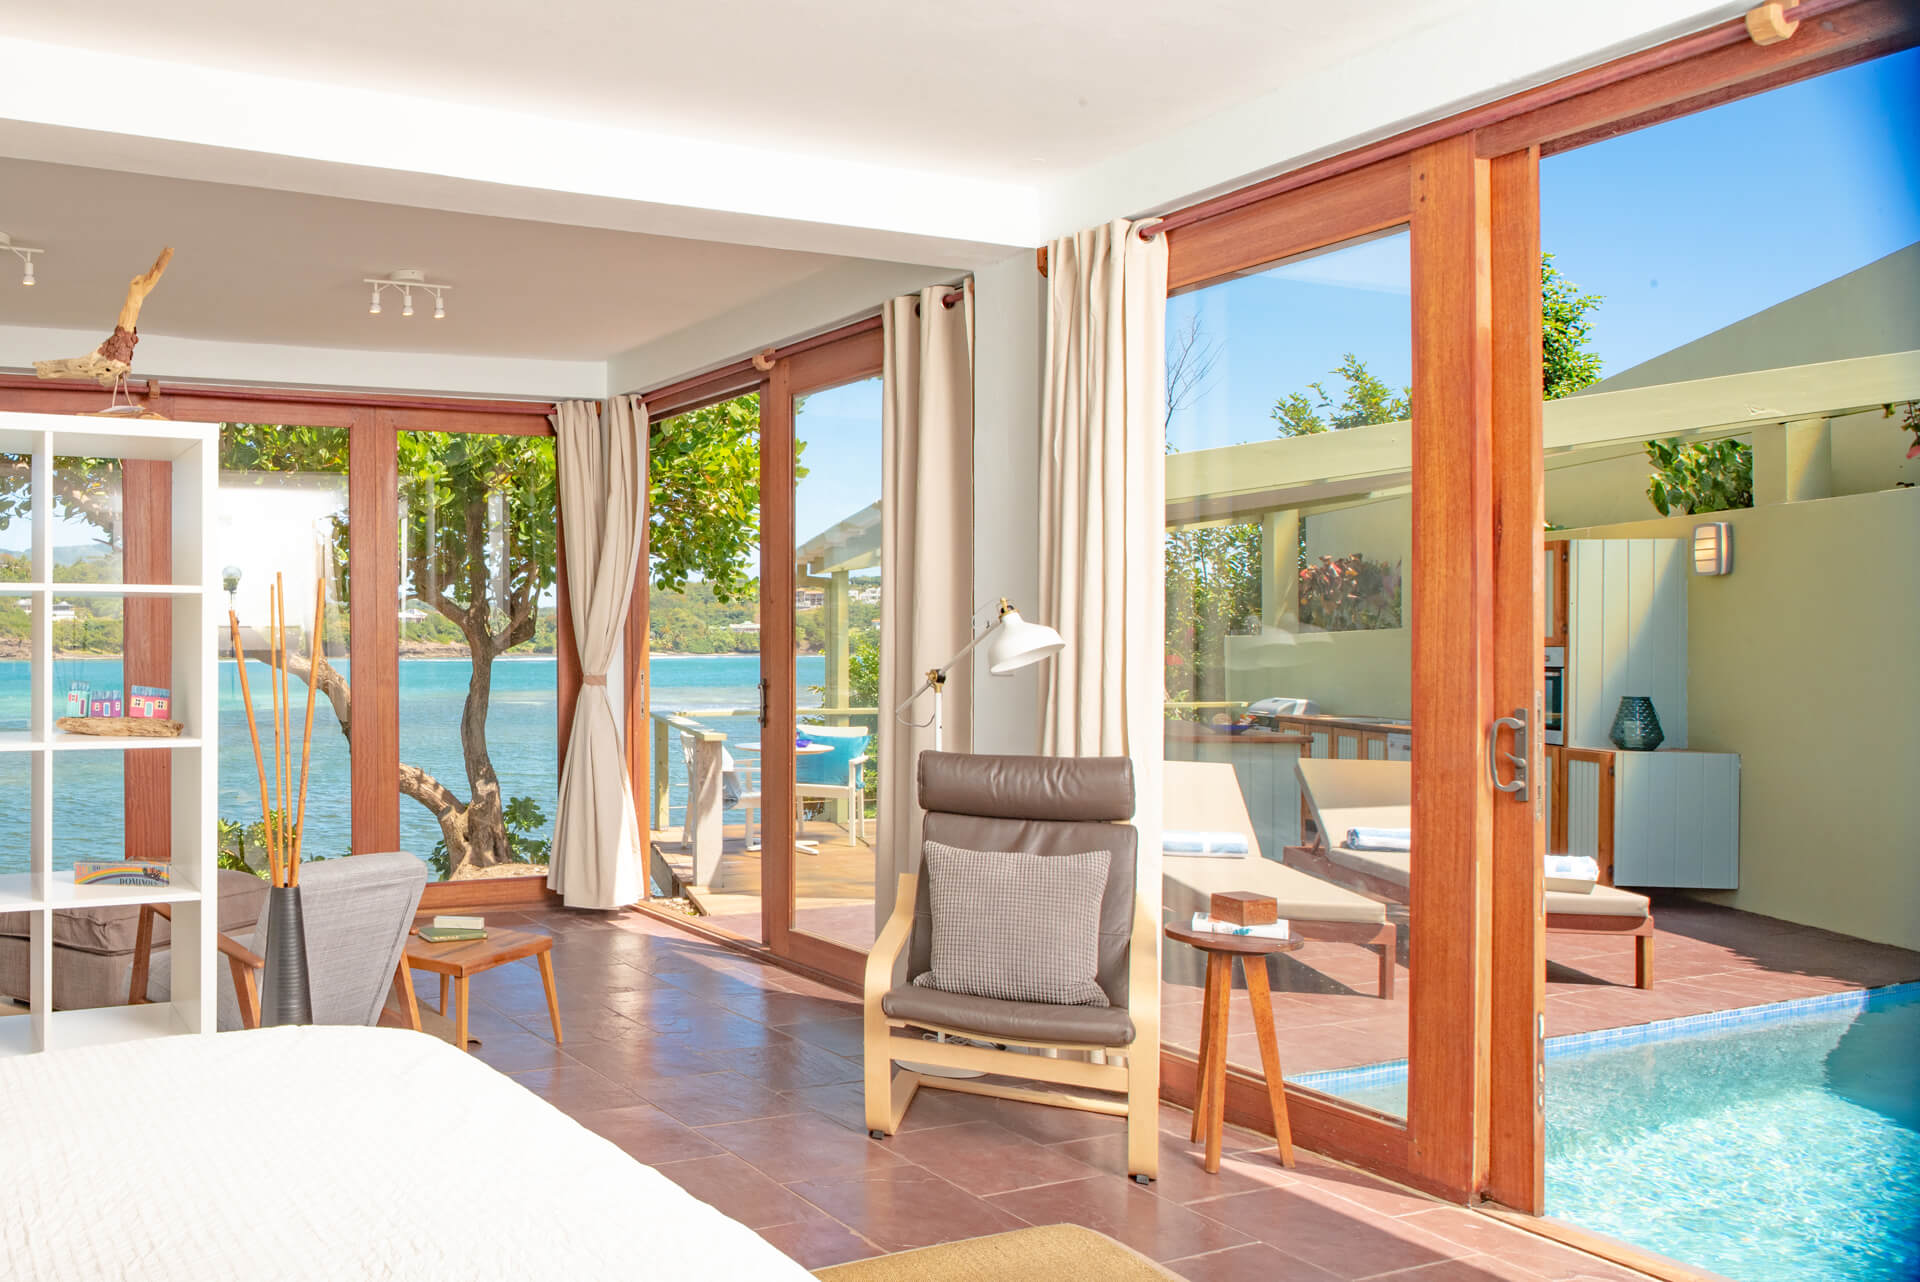 Luxury Villa in Grenada with outdoor shower